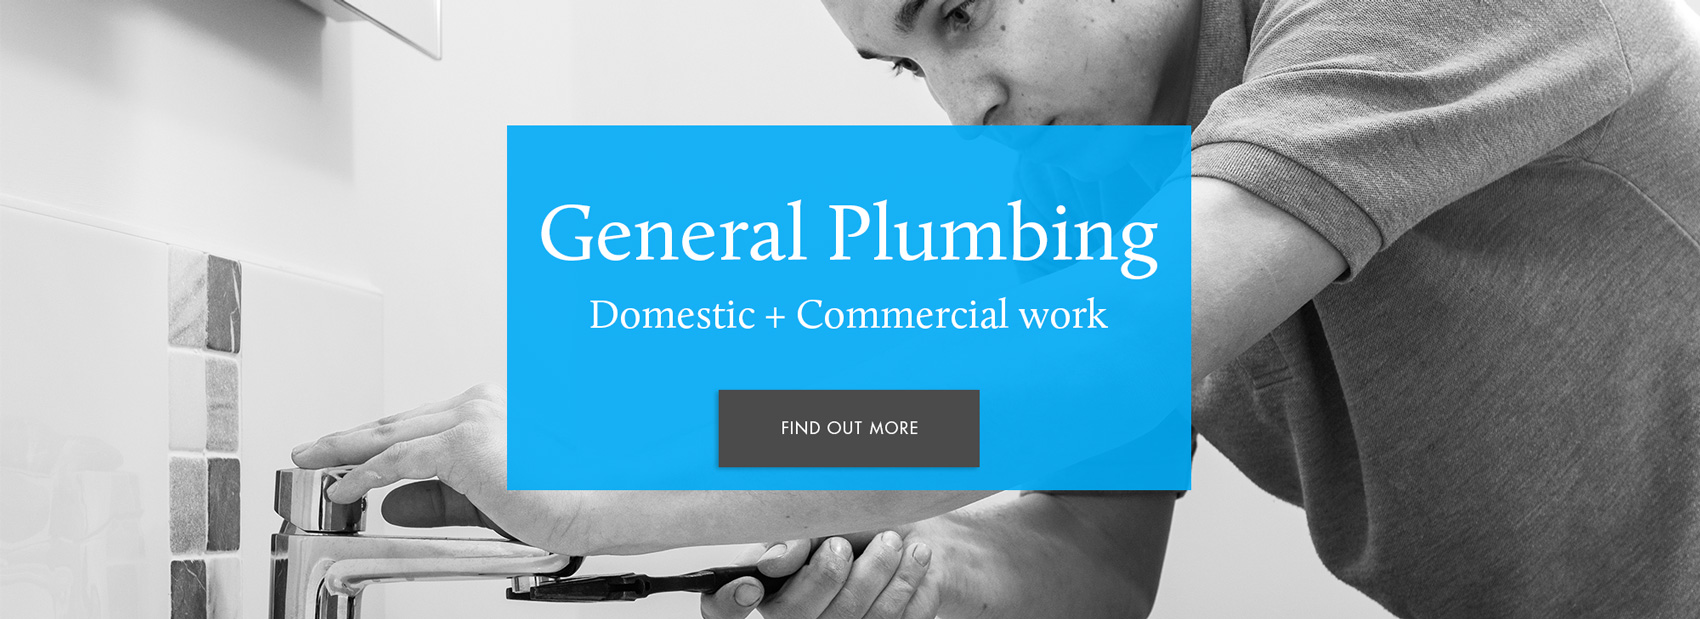 General plumbing